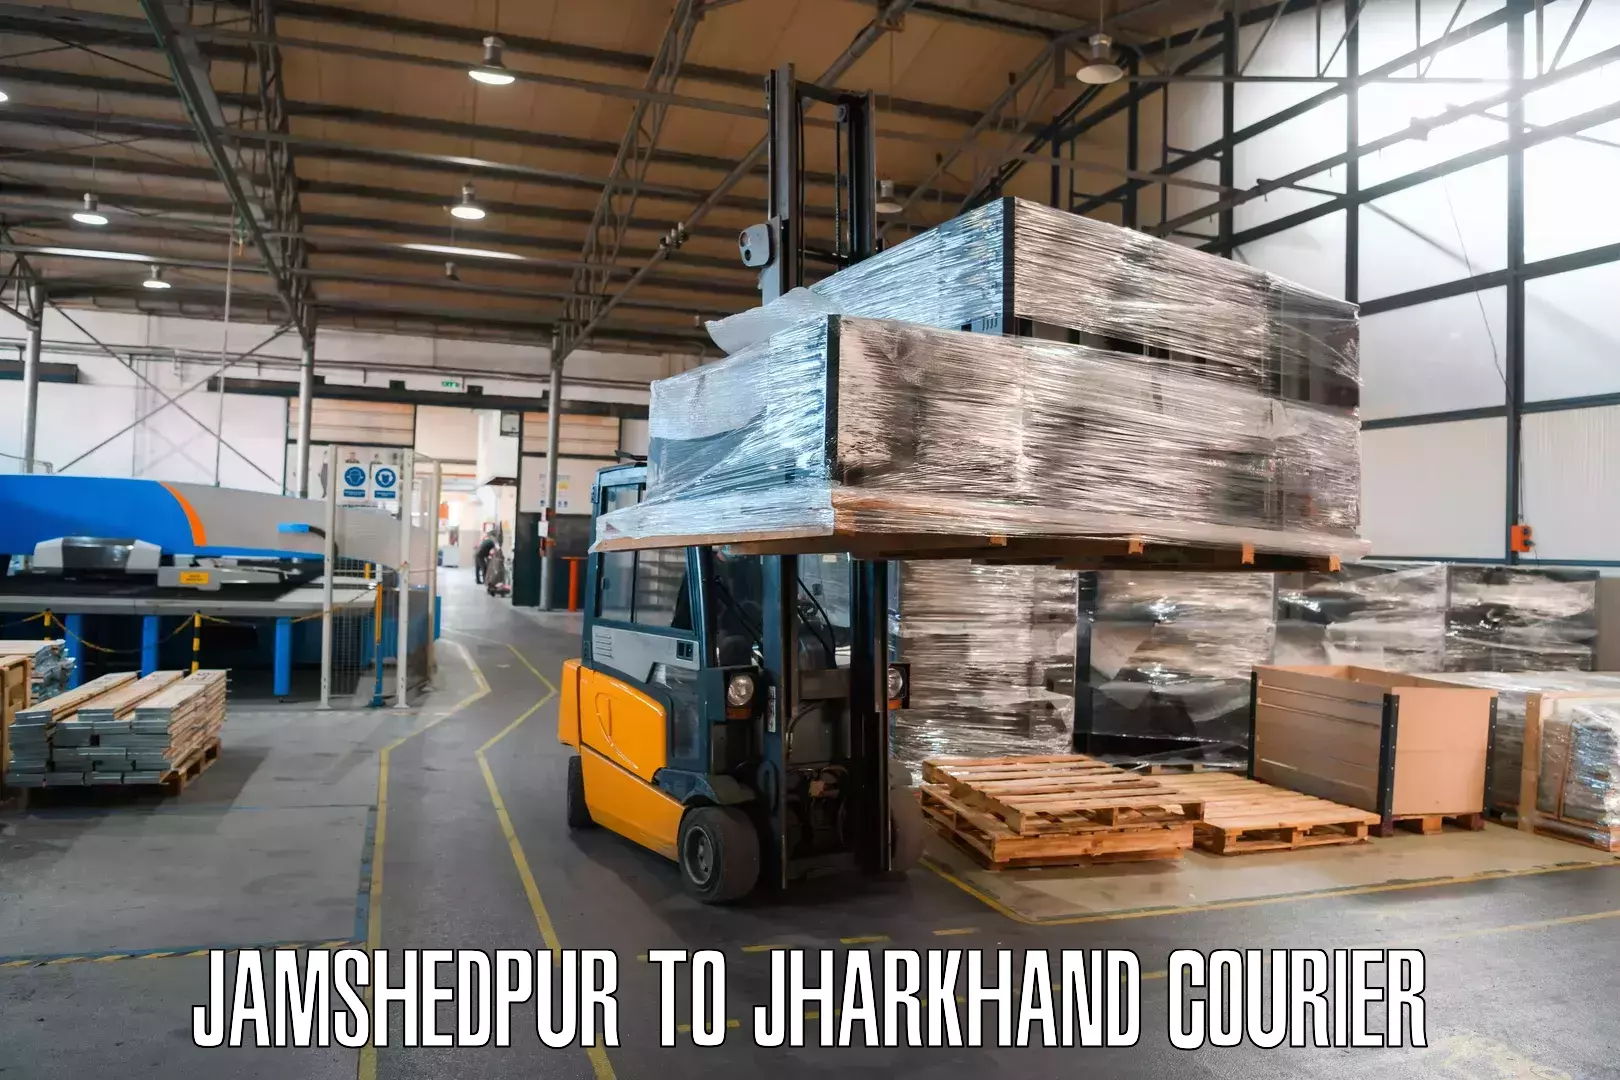 Courier service comparison Jamshedpur to Palamu